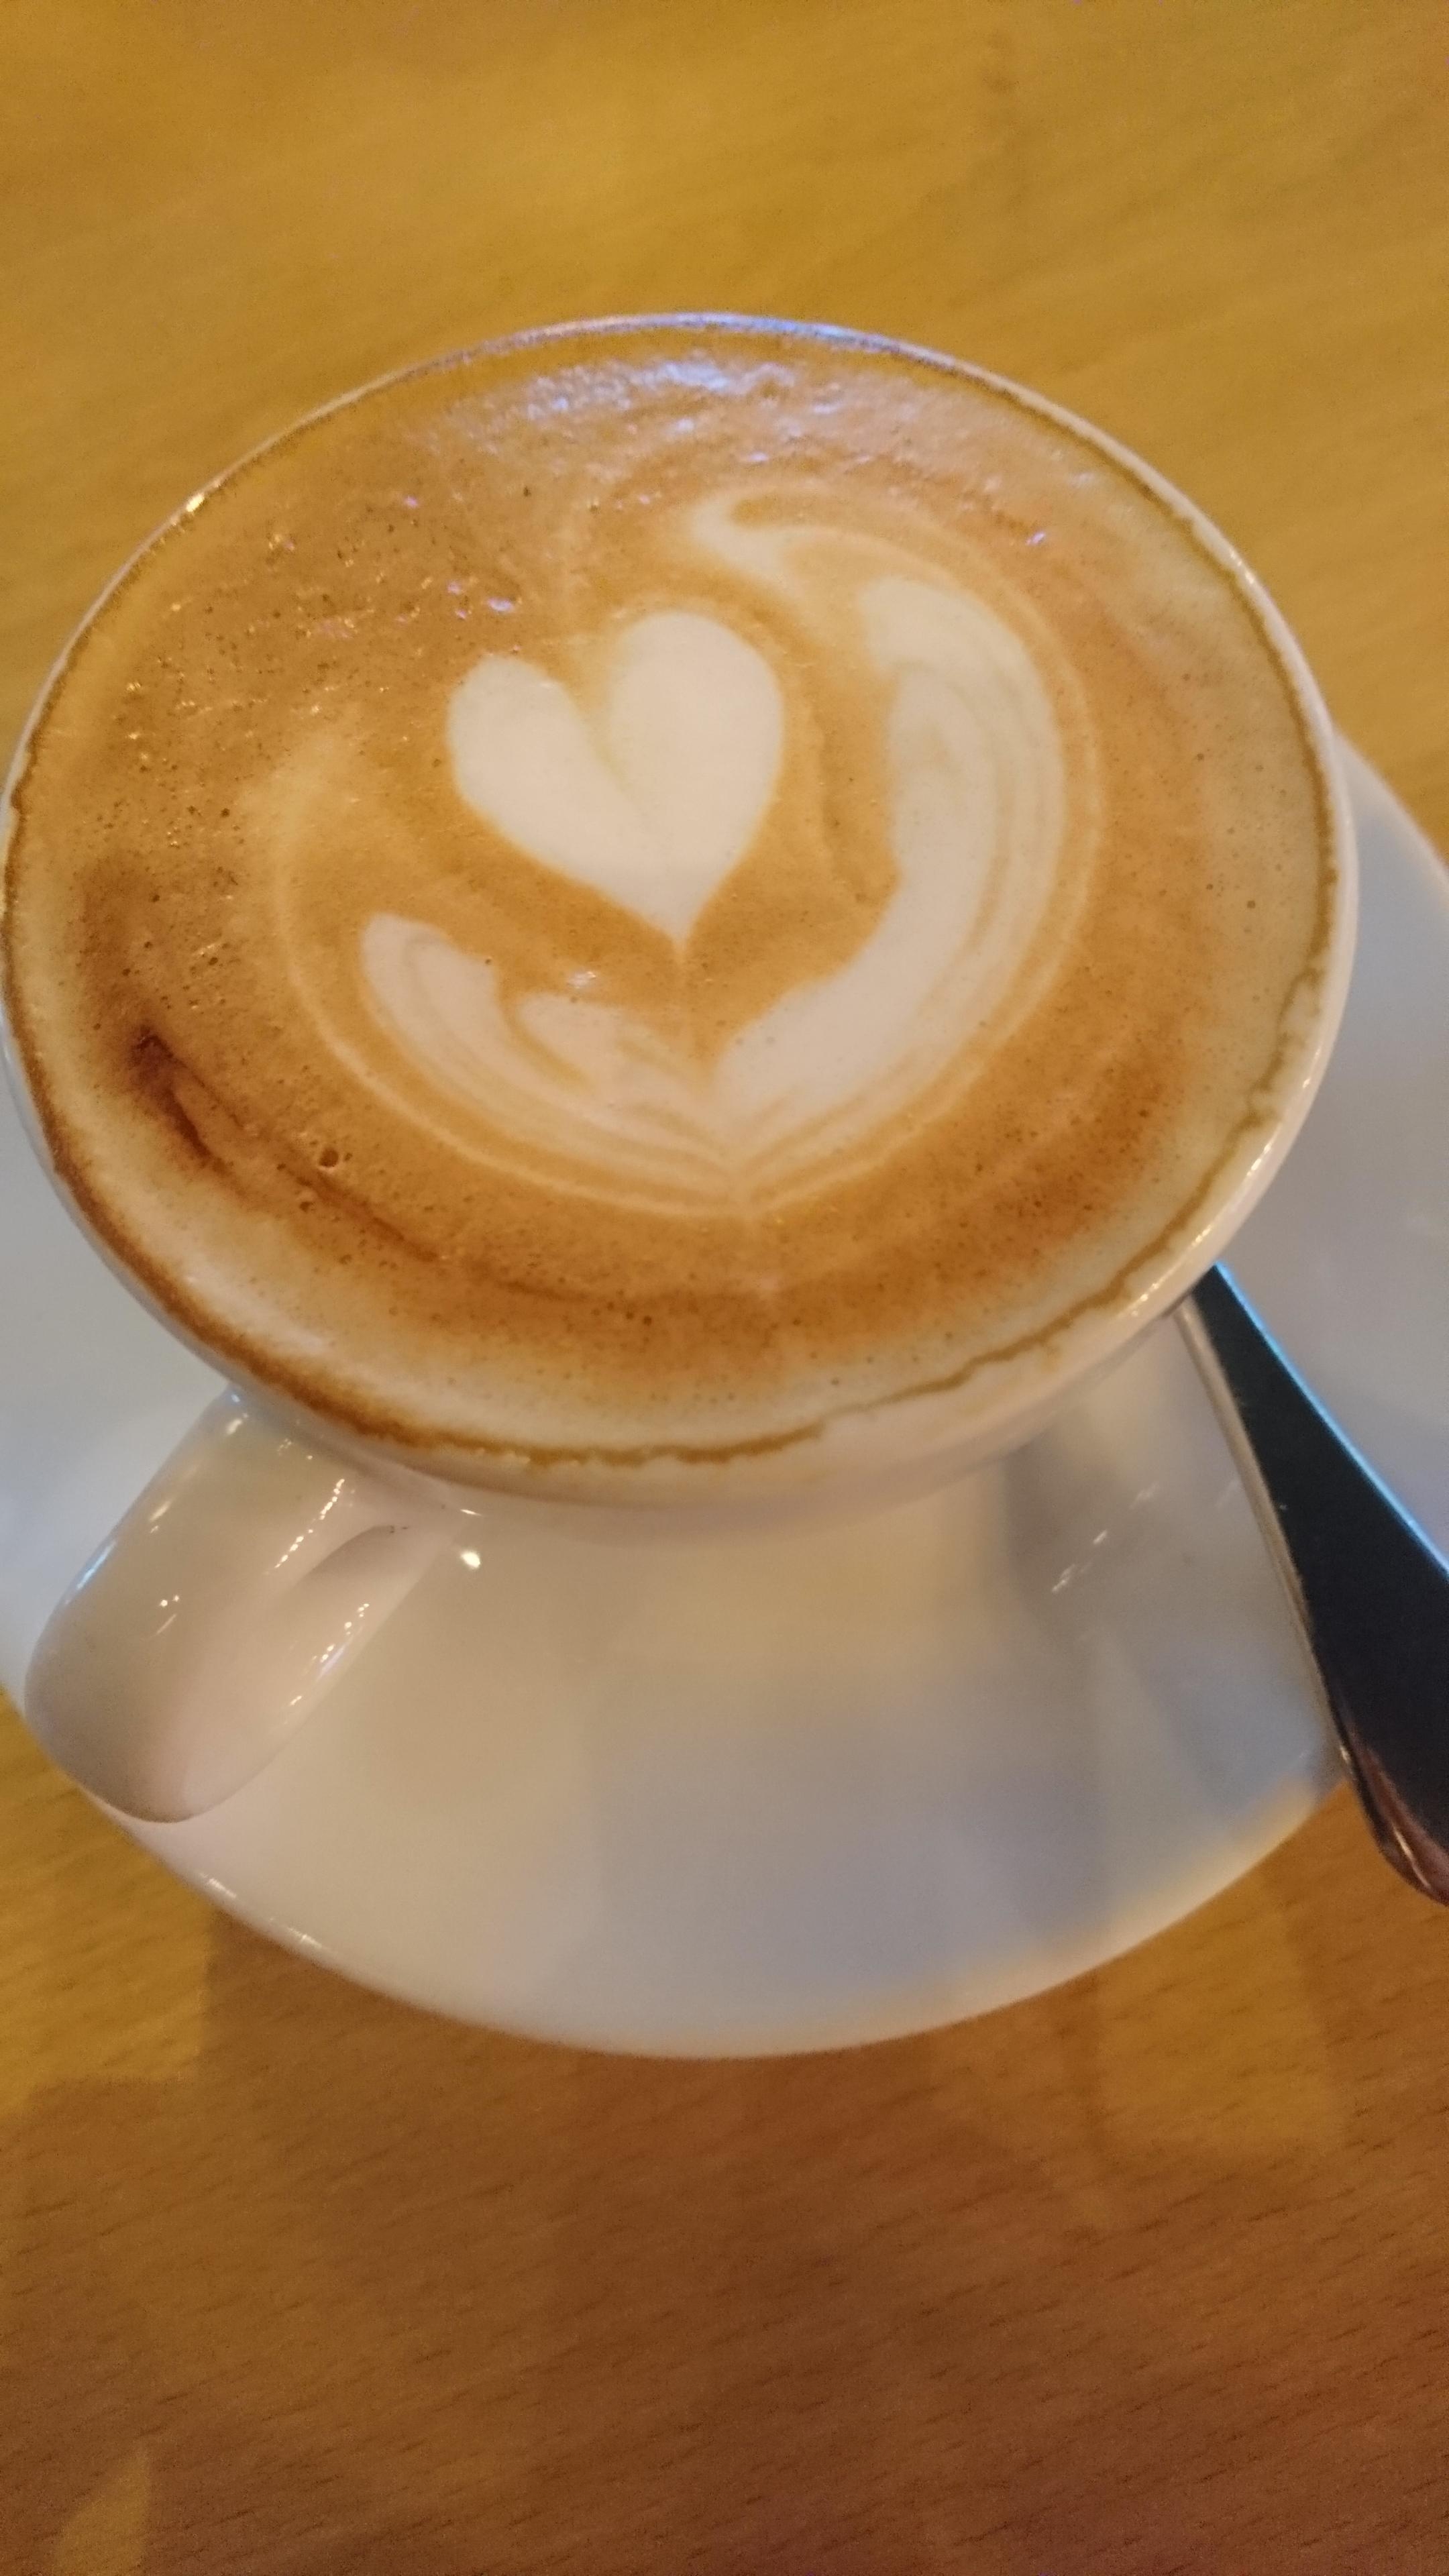 My ❤️ belongs to #coffee

#coffeelover